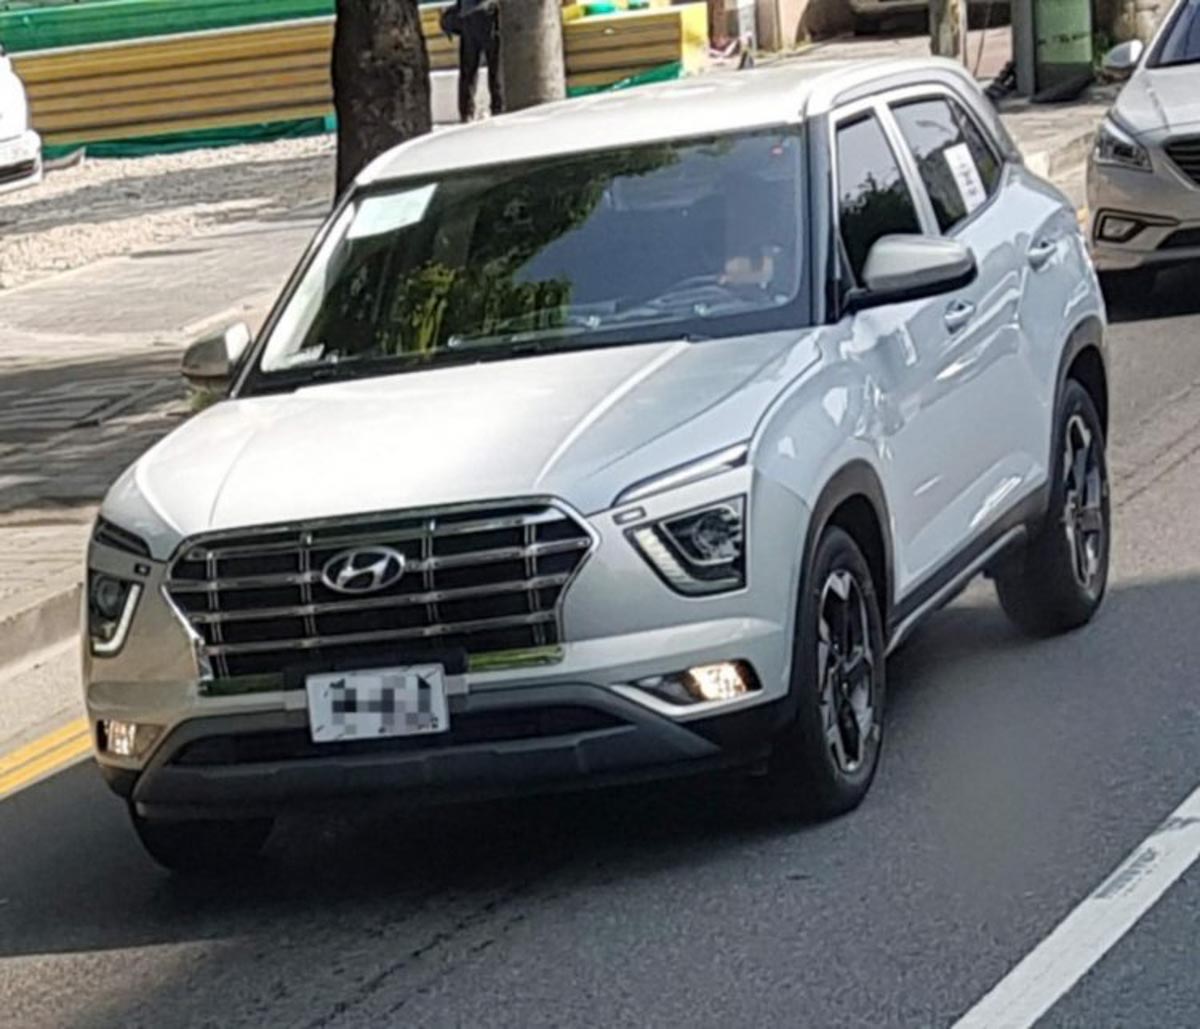 2020 Hyundai Creta Ix25 Spotted Testing Undisguised In Korea